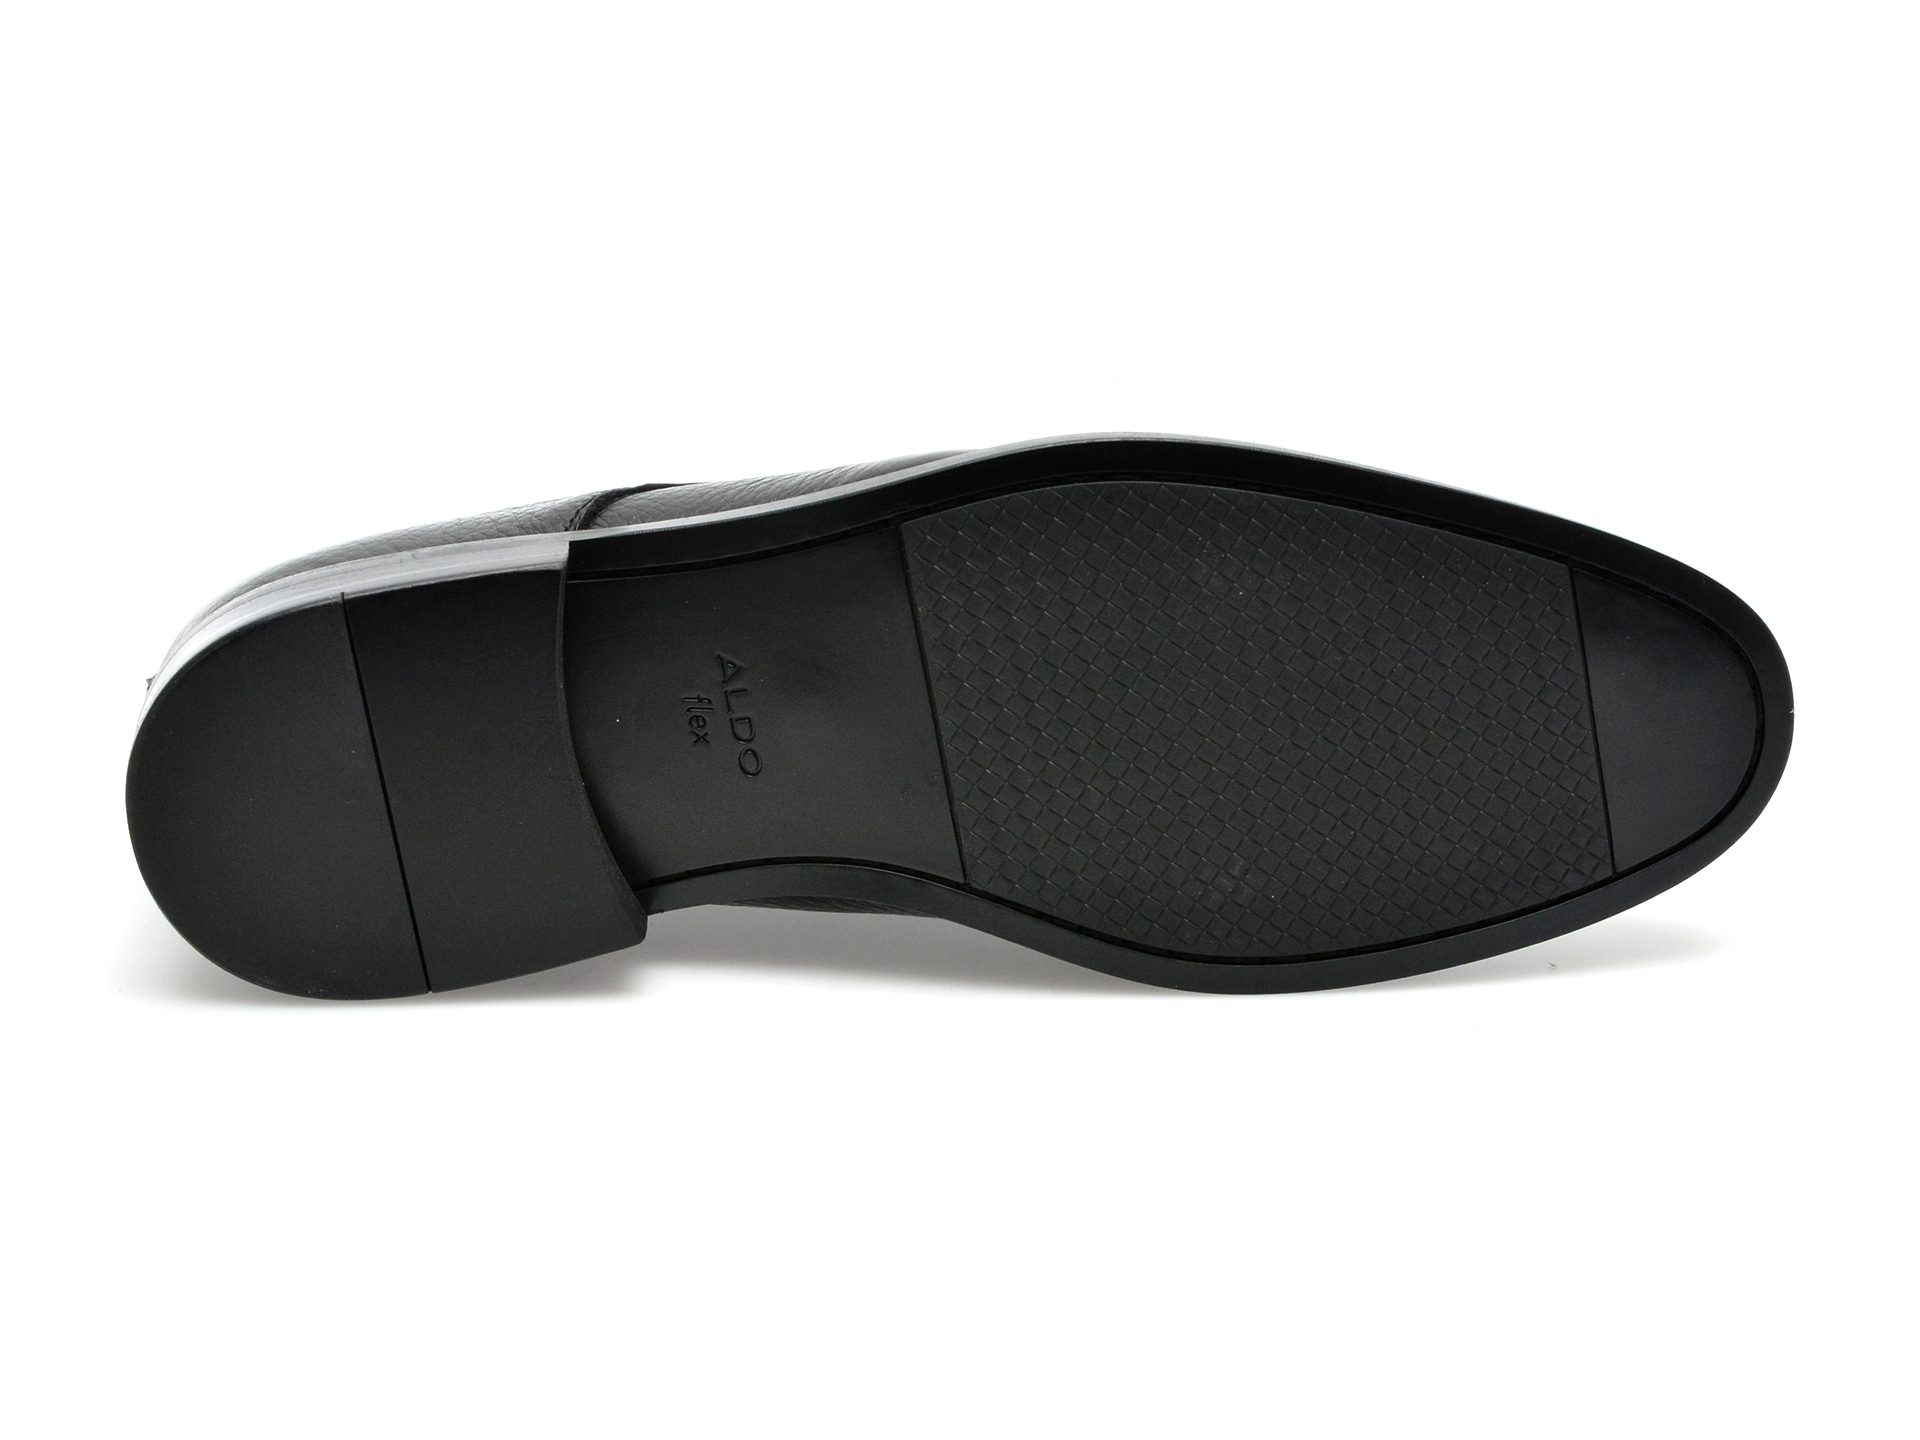 Pantofi ALDO negri, HANFORD001, din piele naturala